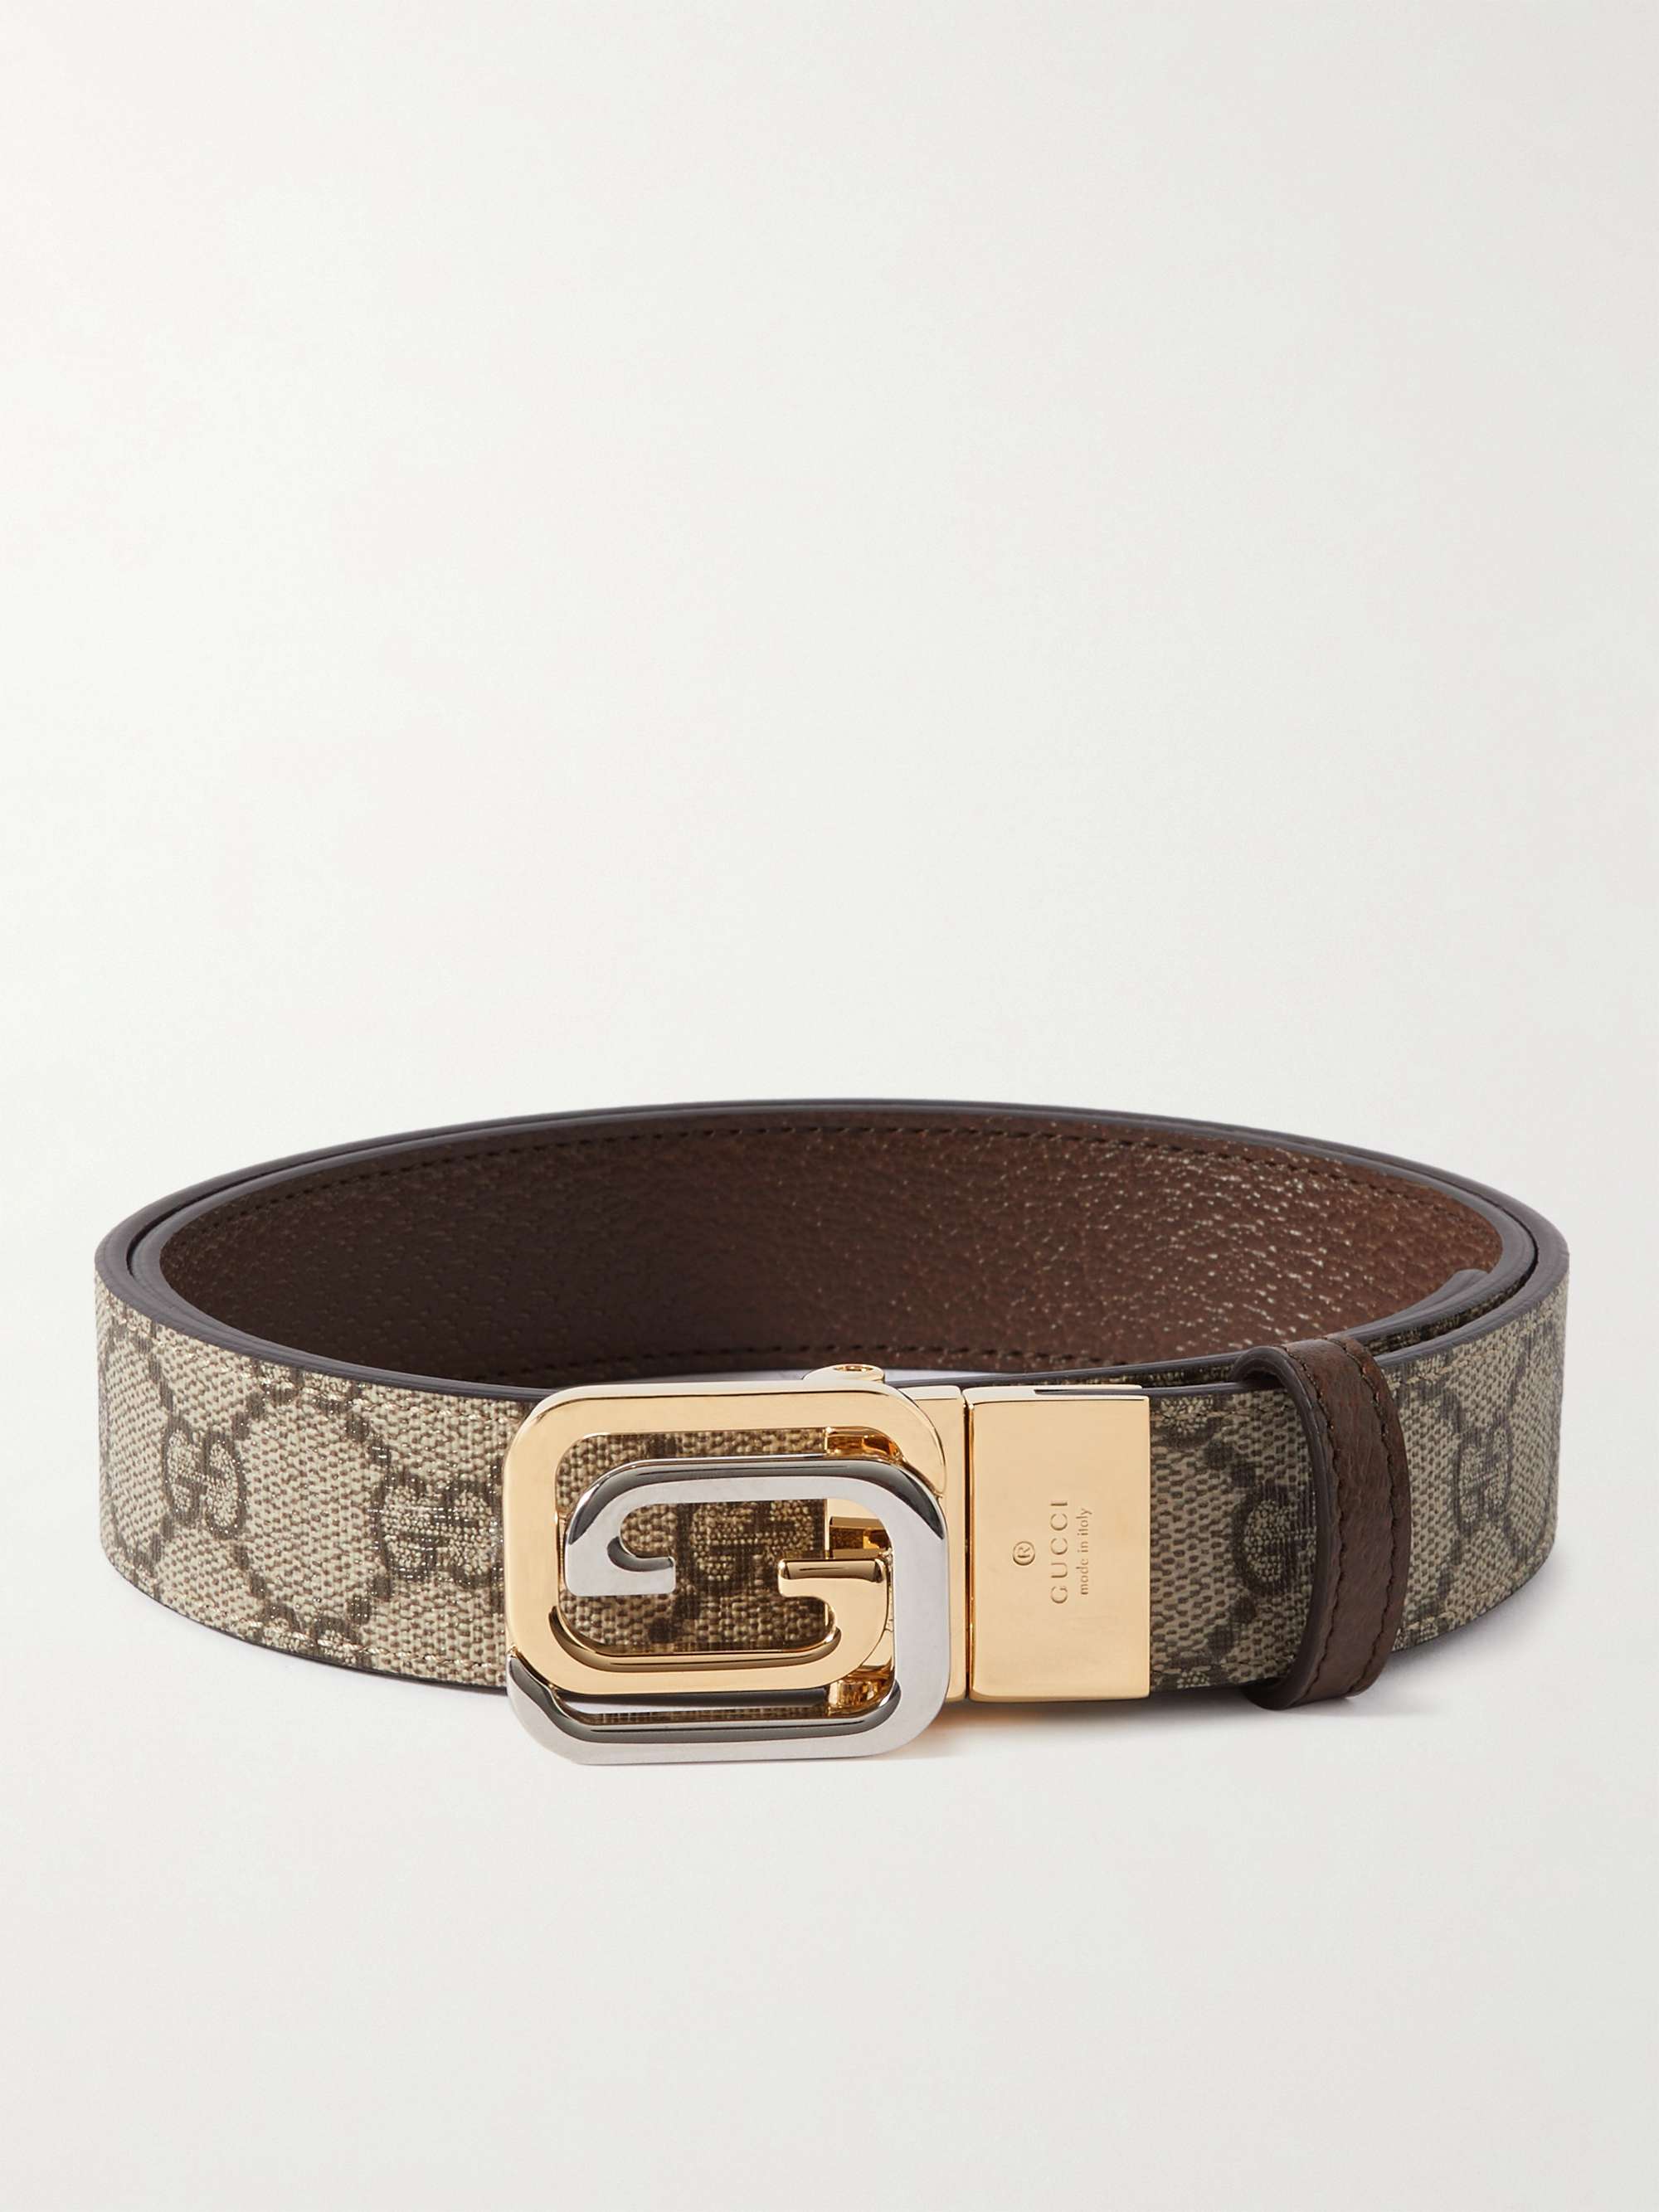 Gucci Men's Reversible Monogrammed Belt